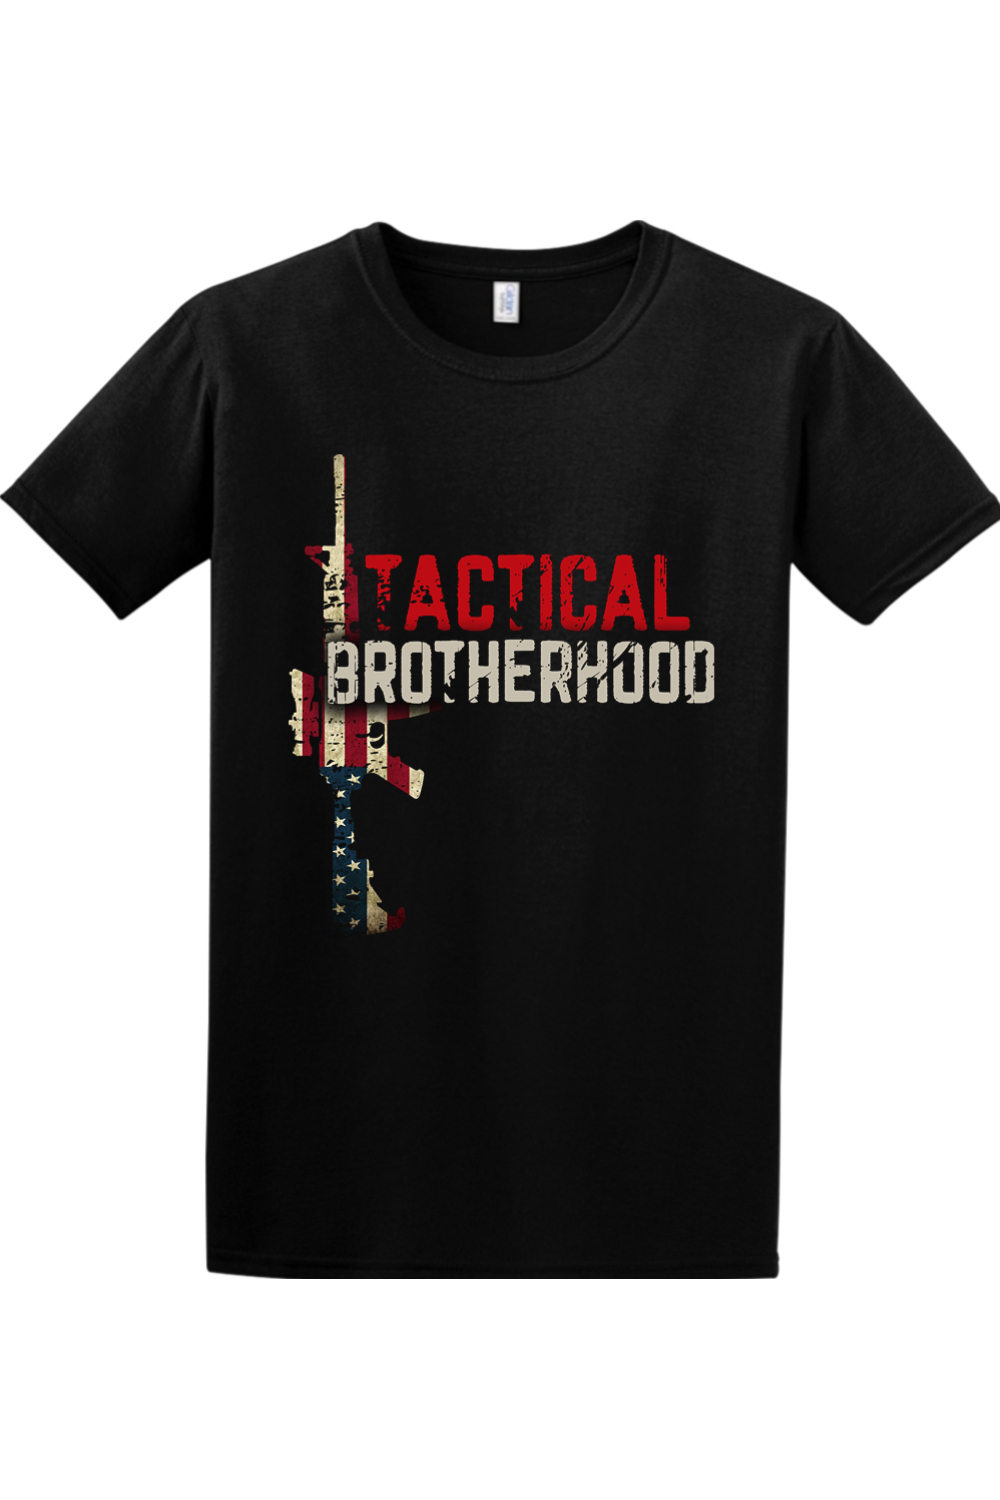 OG Tactical Brotherhood Official T-Shirt